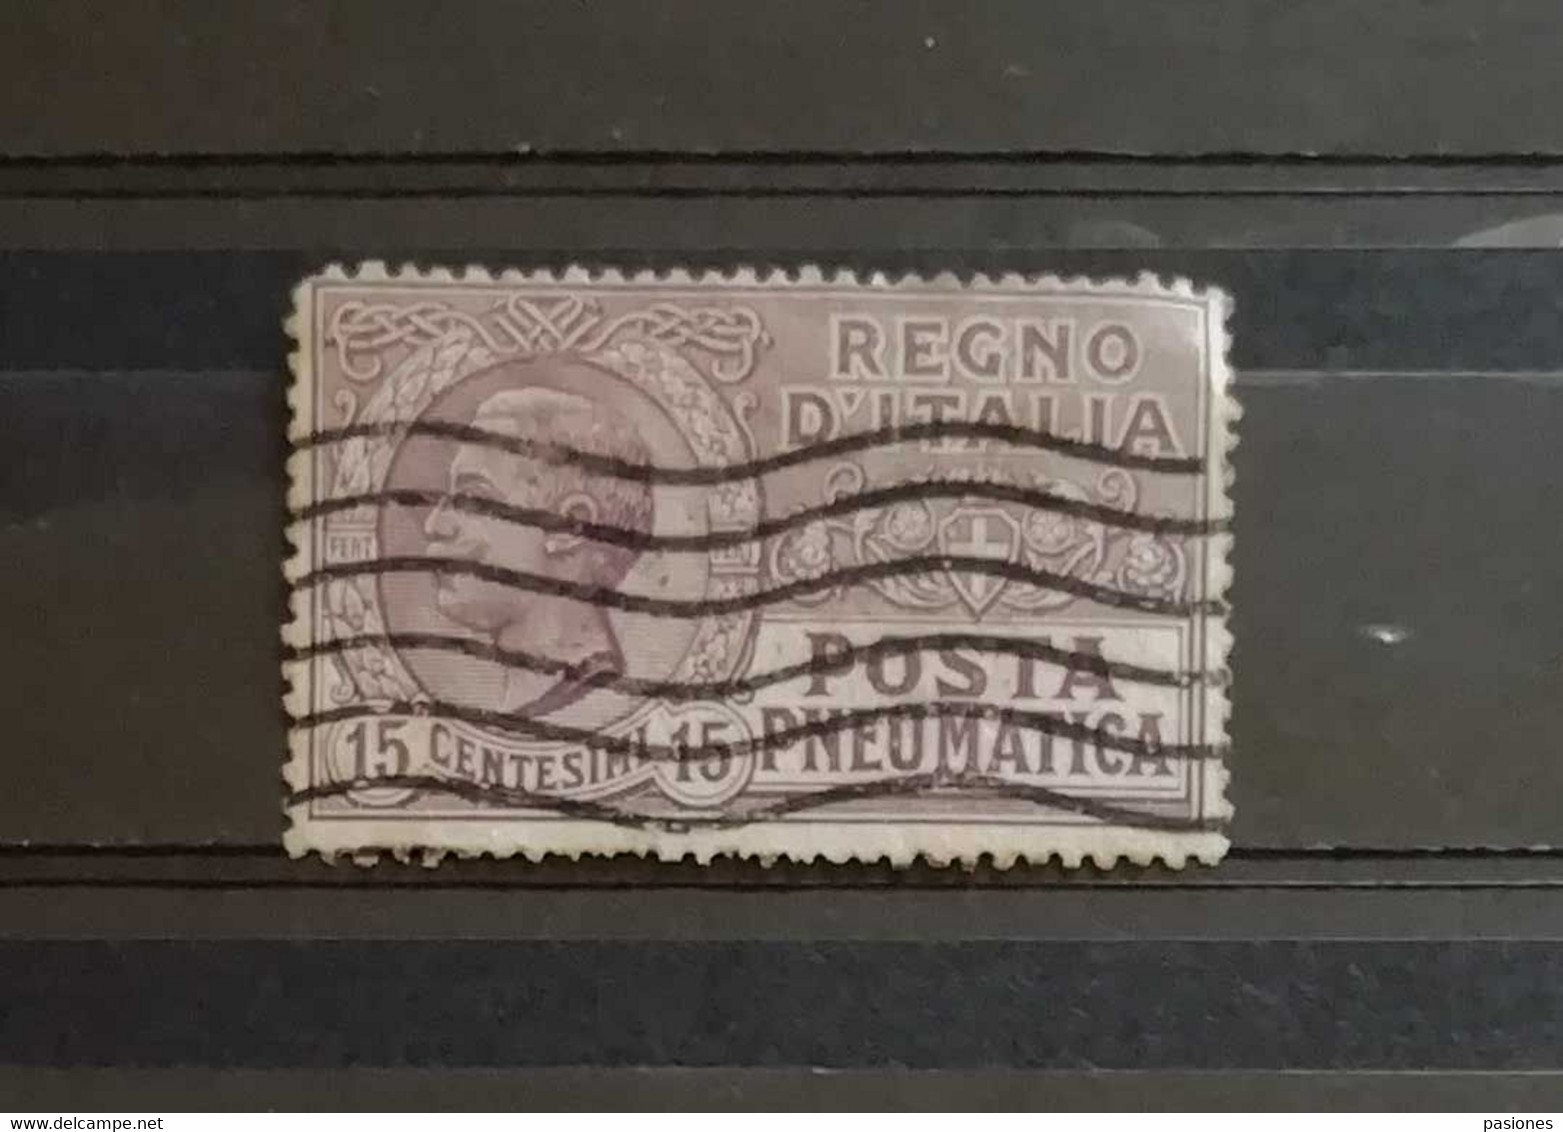 Regno D'Italia Vittorio Emanuele III 1913-23 N. 2 Posta Pneumatica Cent. 15 Usato - Correo Neumático